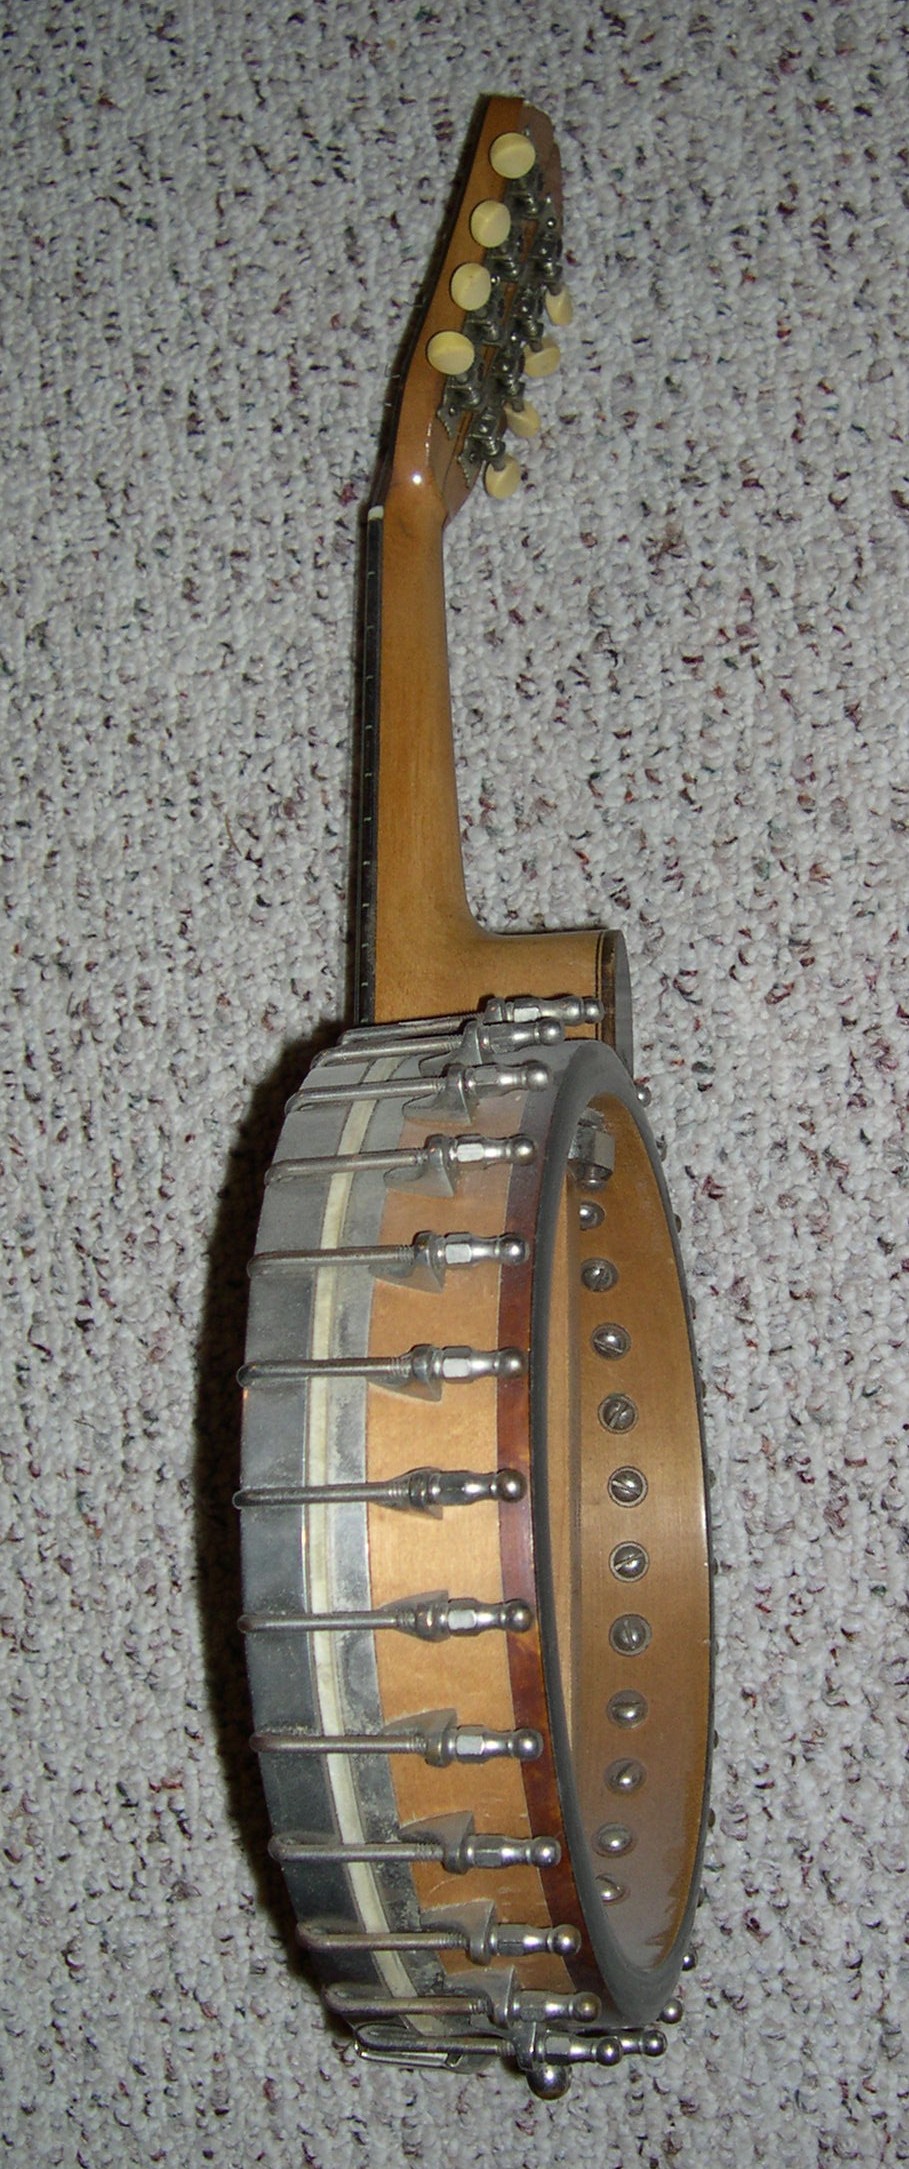 1922 Vega Little Wonder Banjolin - Profile